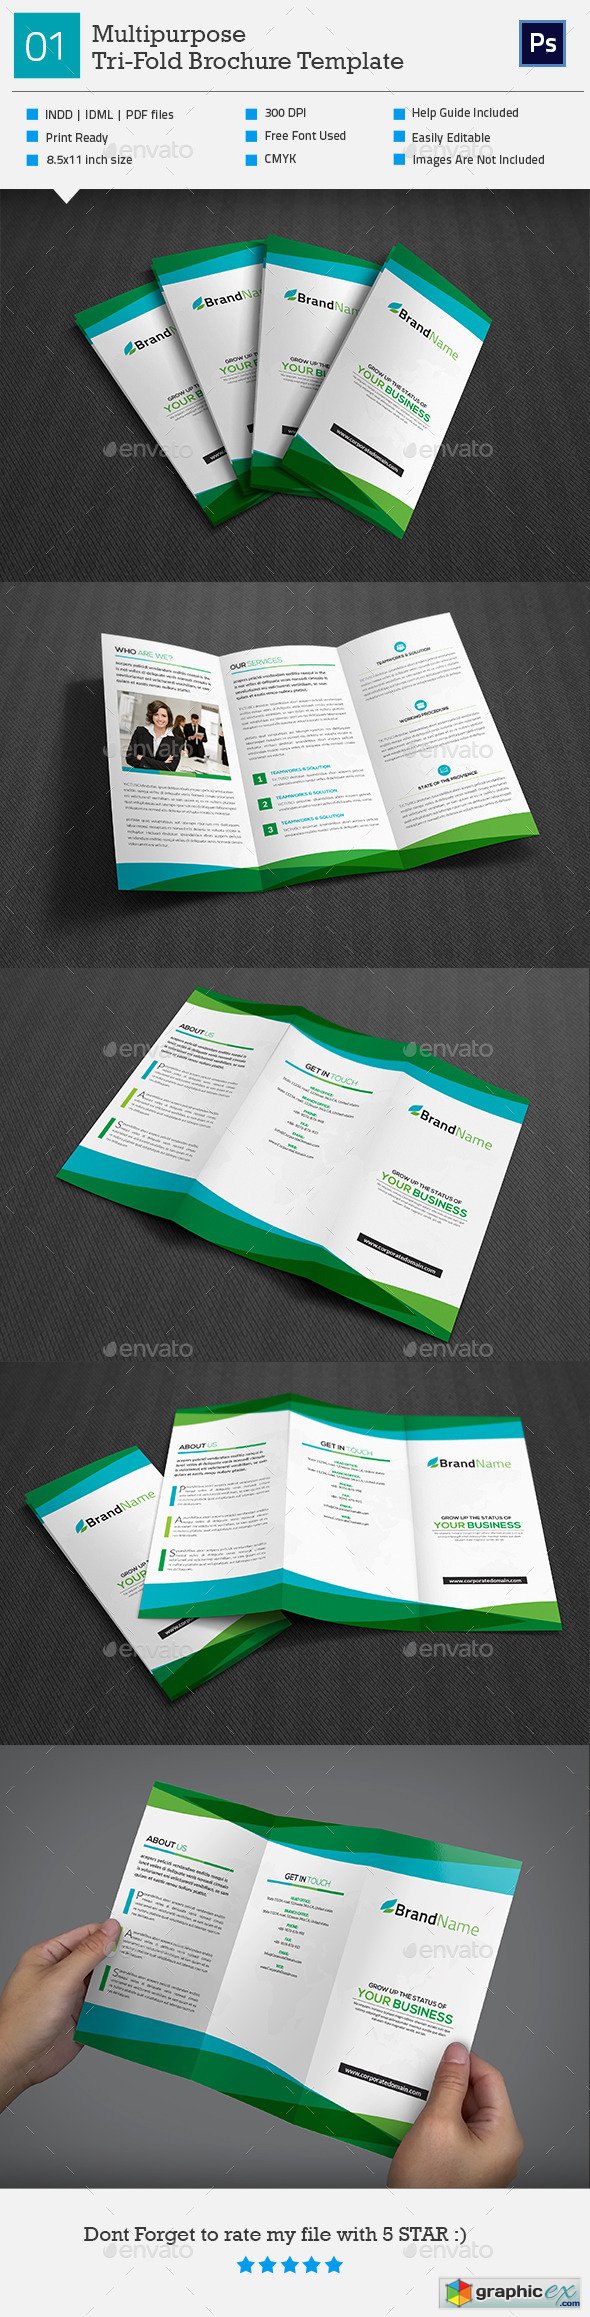 Multipurpose Tri-Fold Brochure_V1